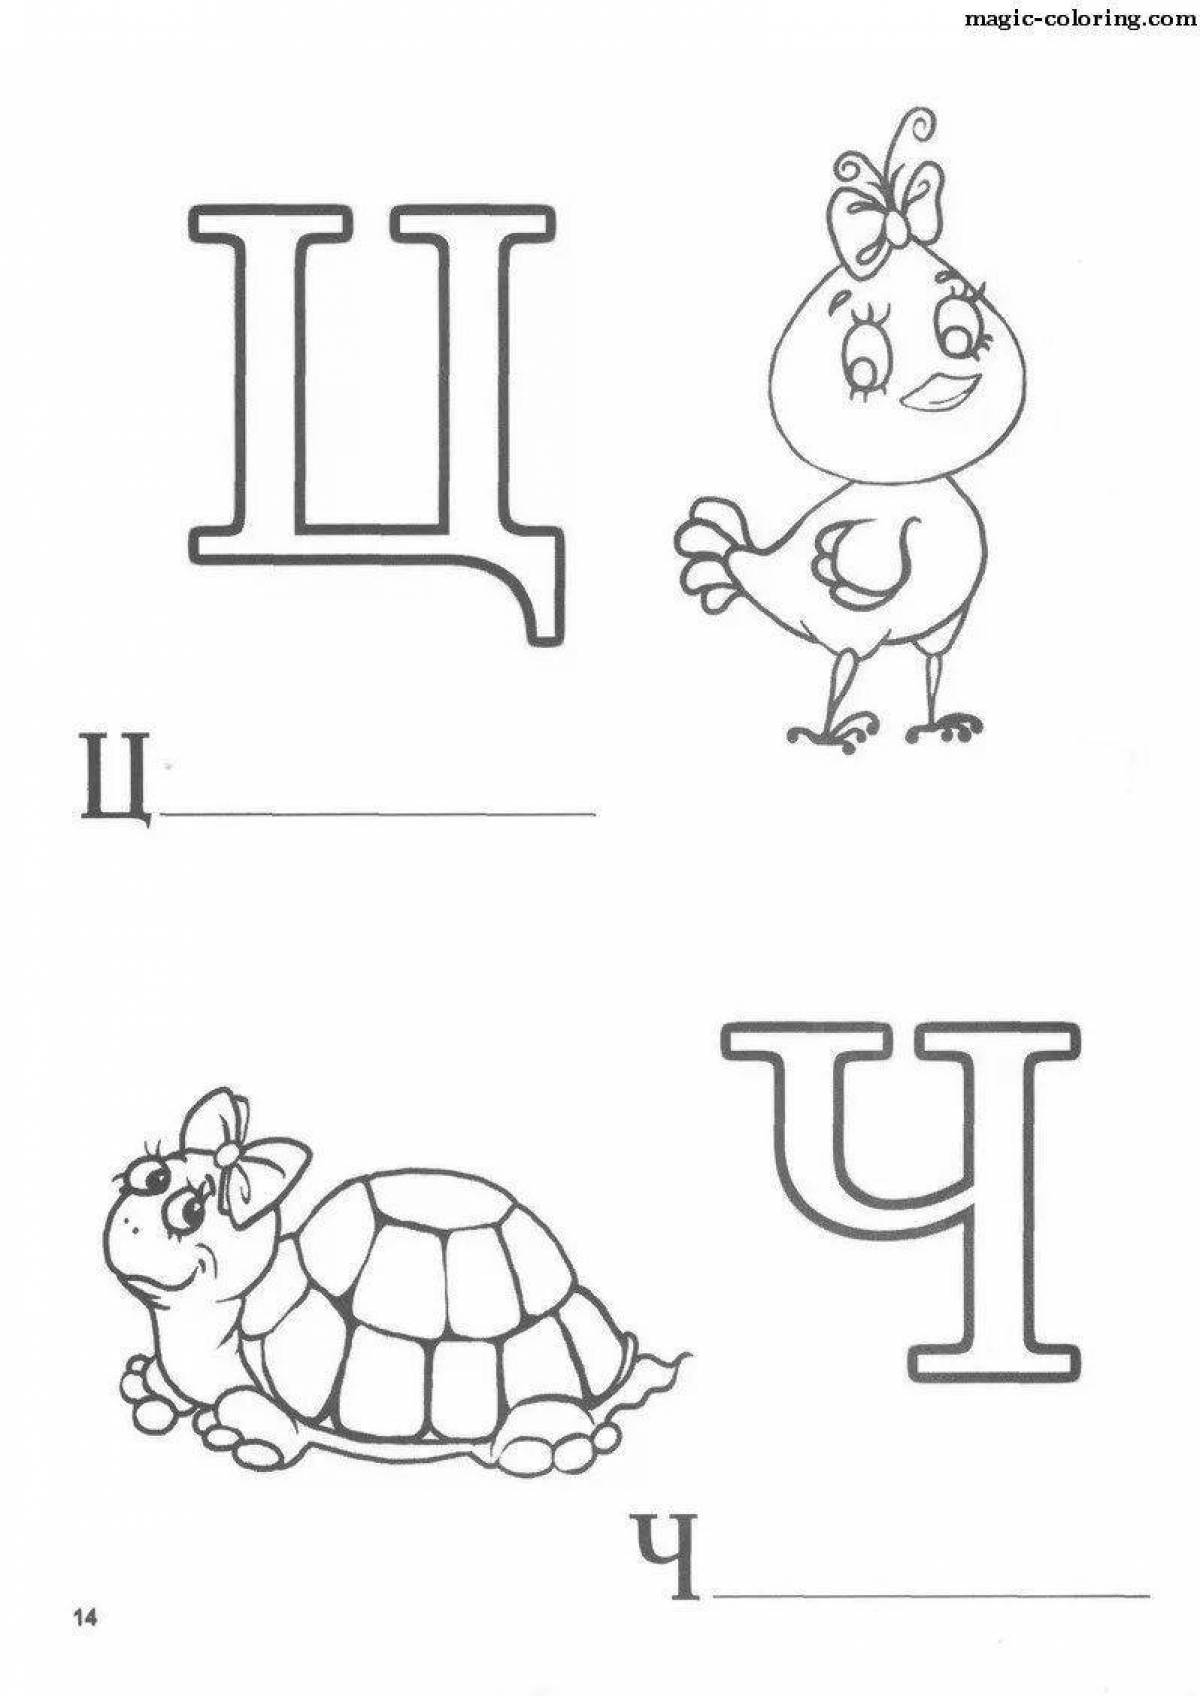 Alphabet for children 5 6 years old #13